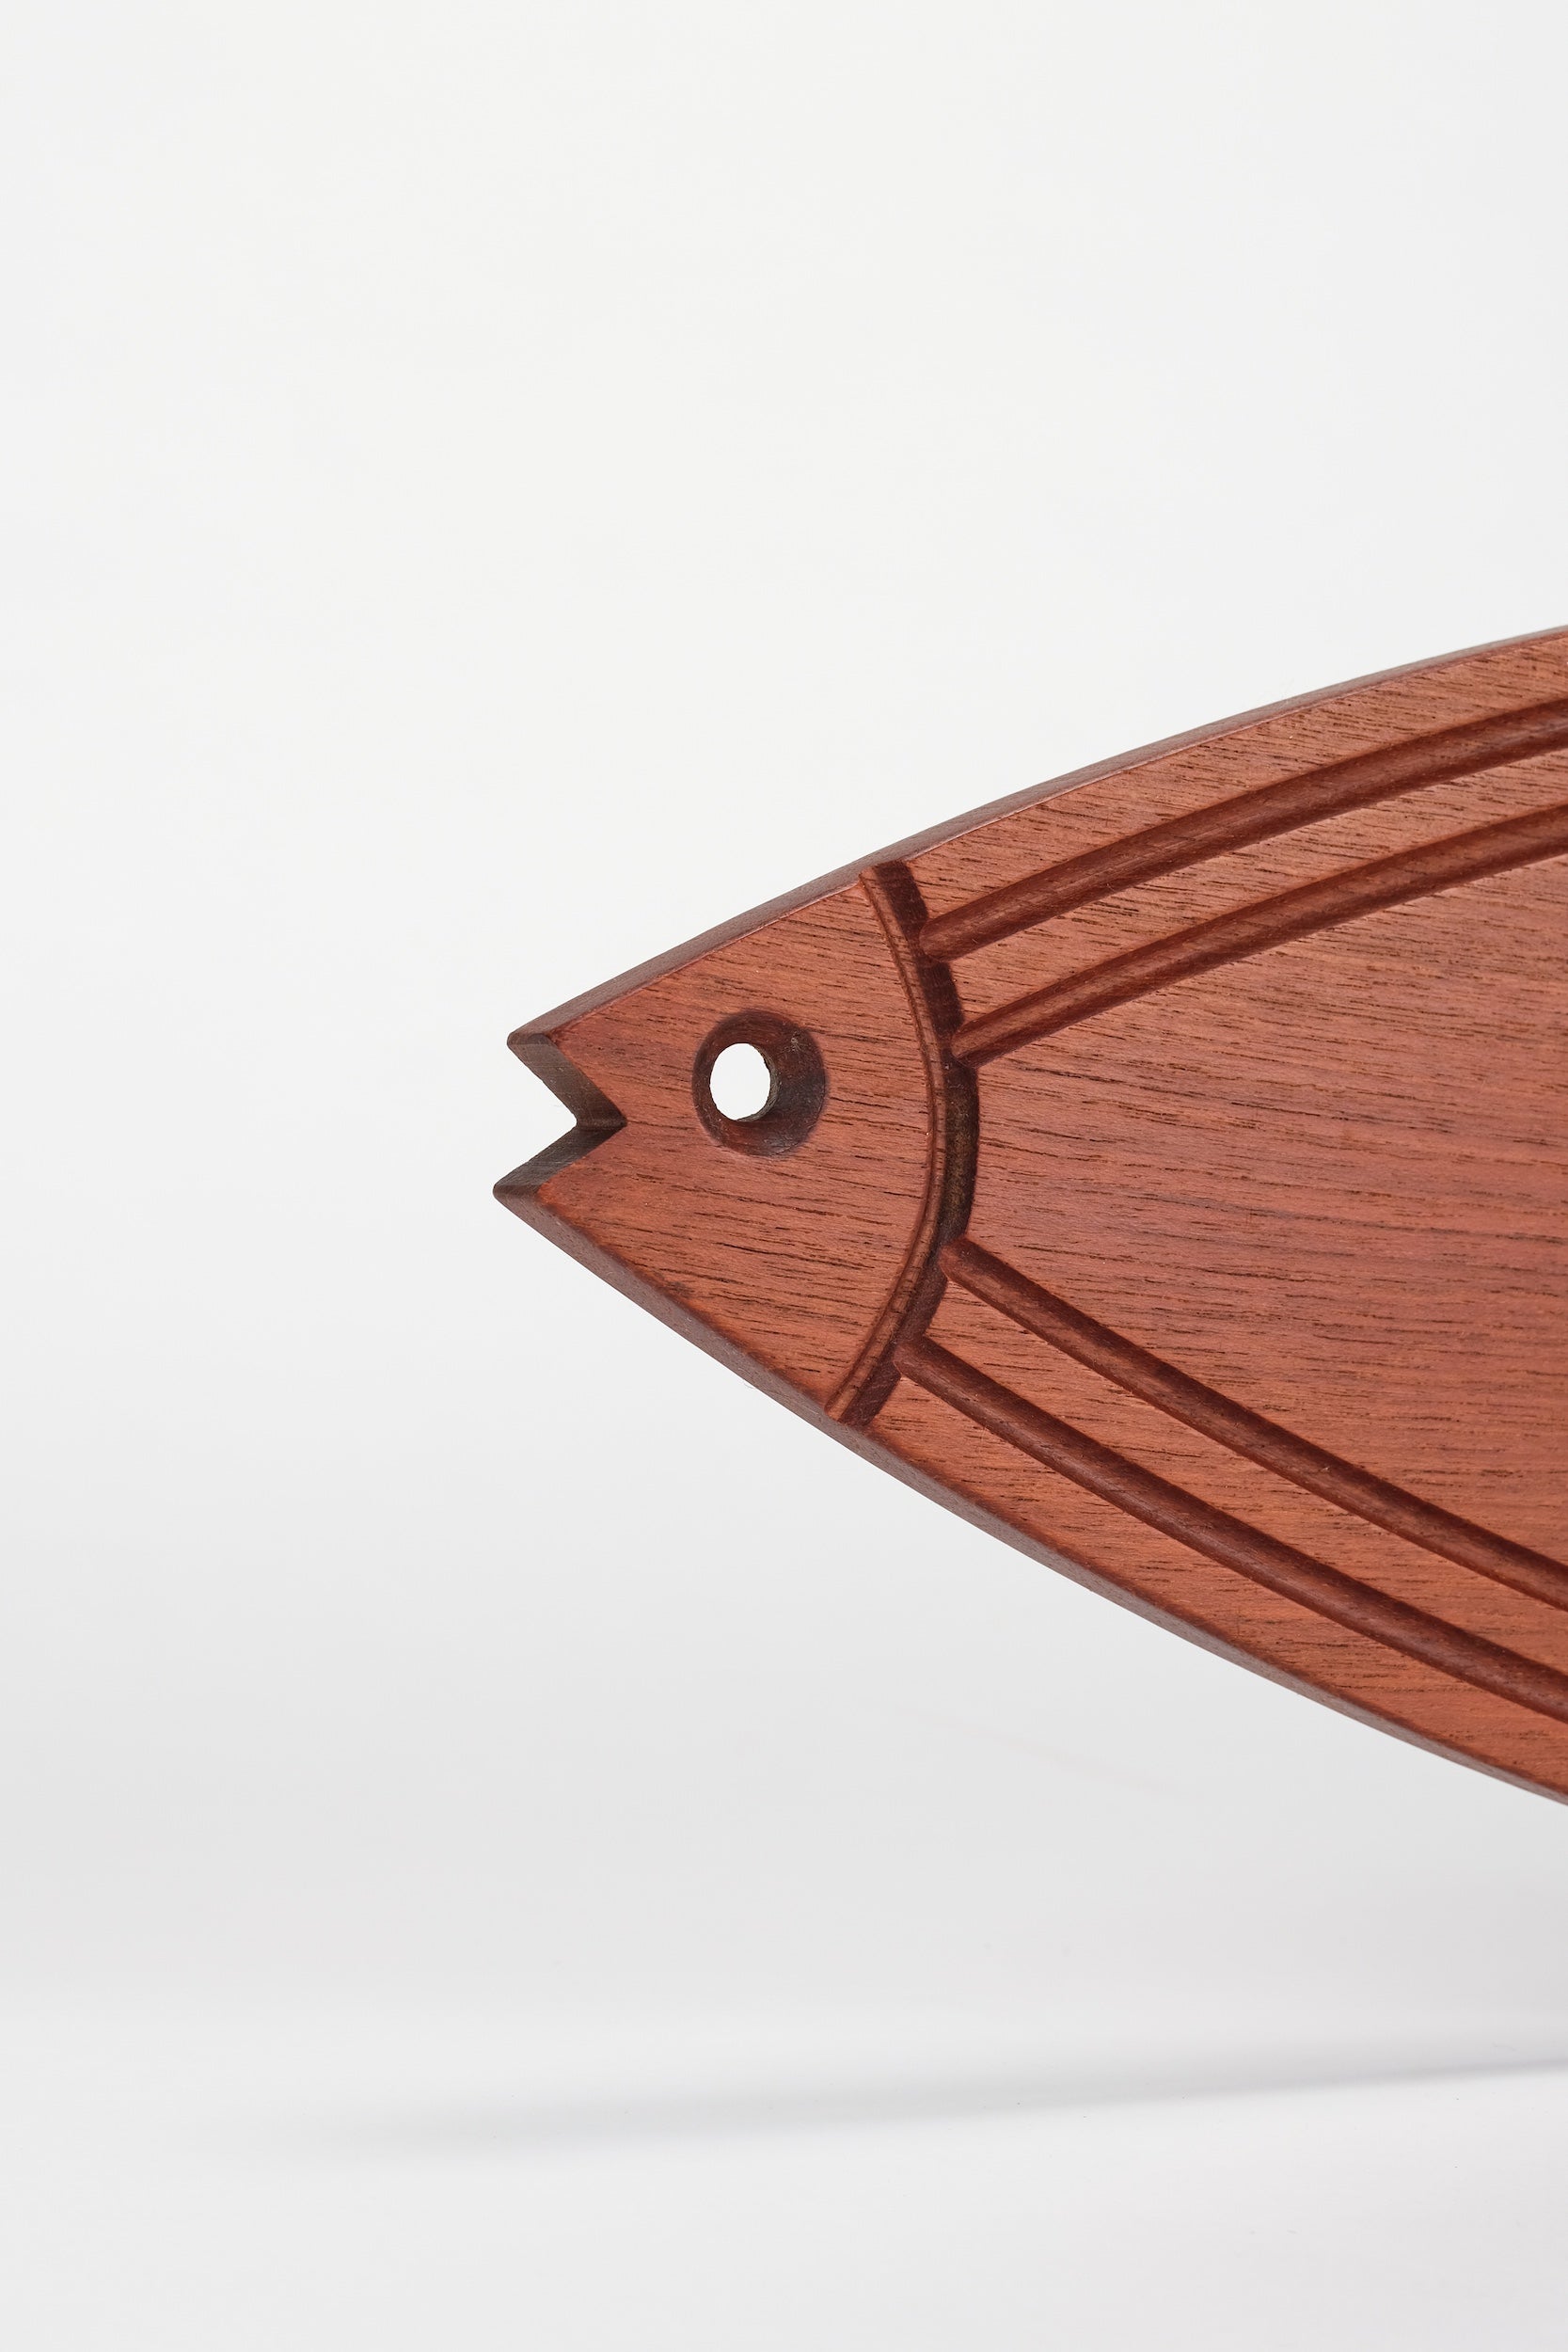 Cutting Board shaped like a Fish, Teak, Denmark, 60s